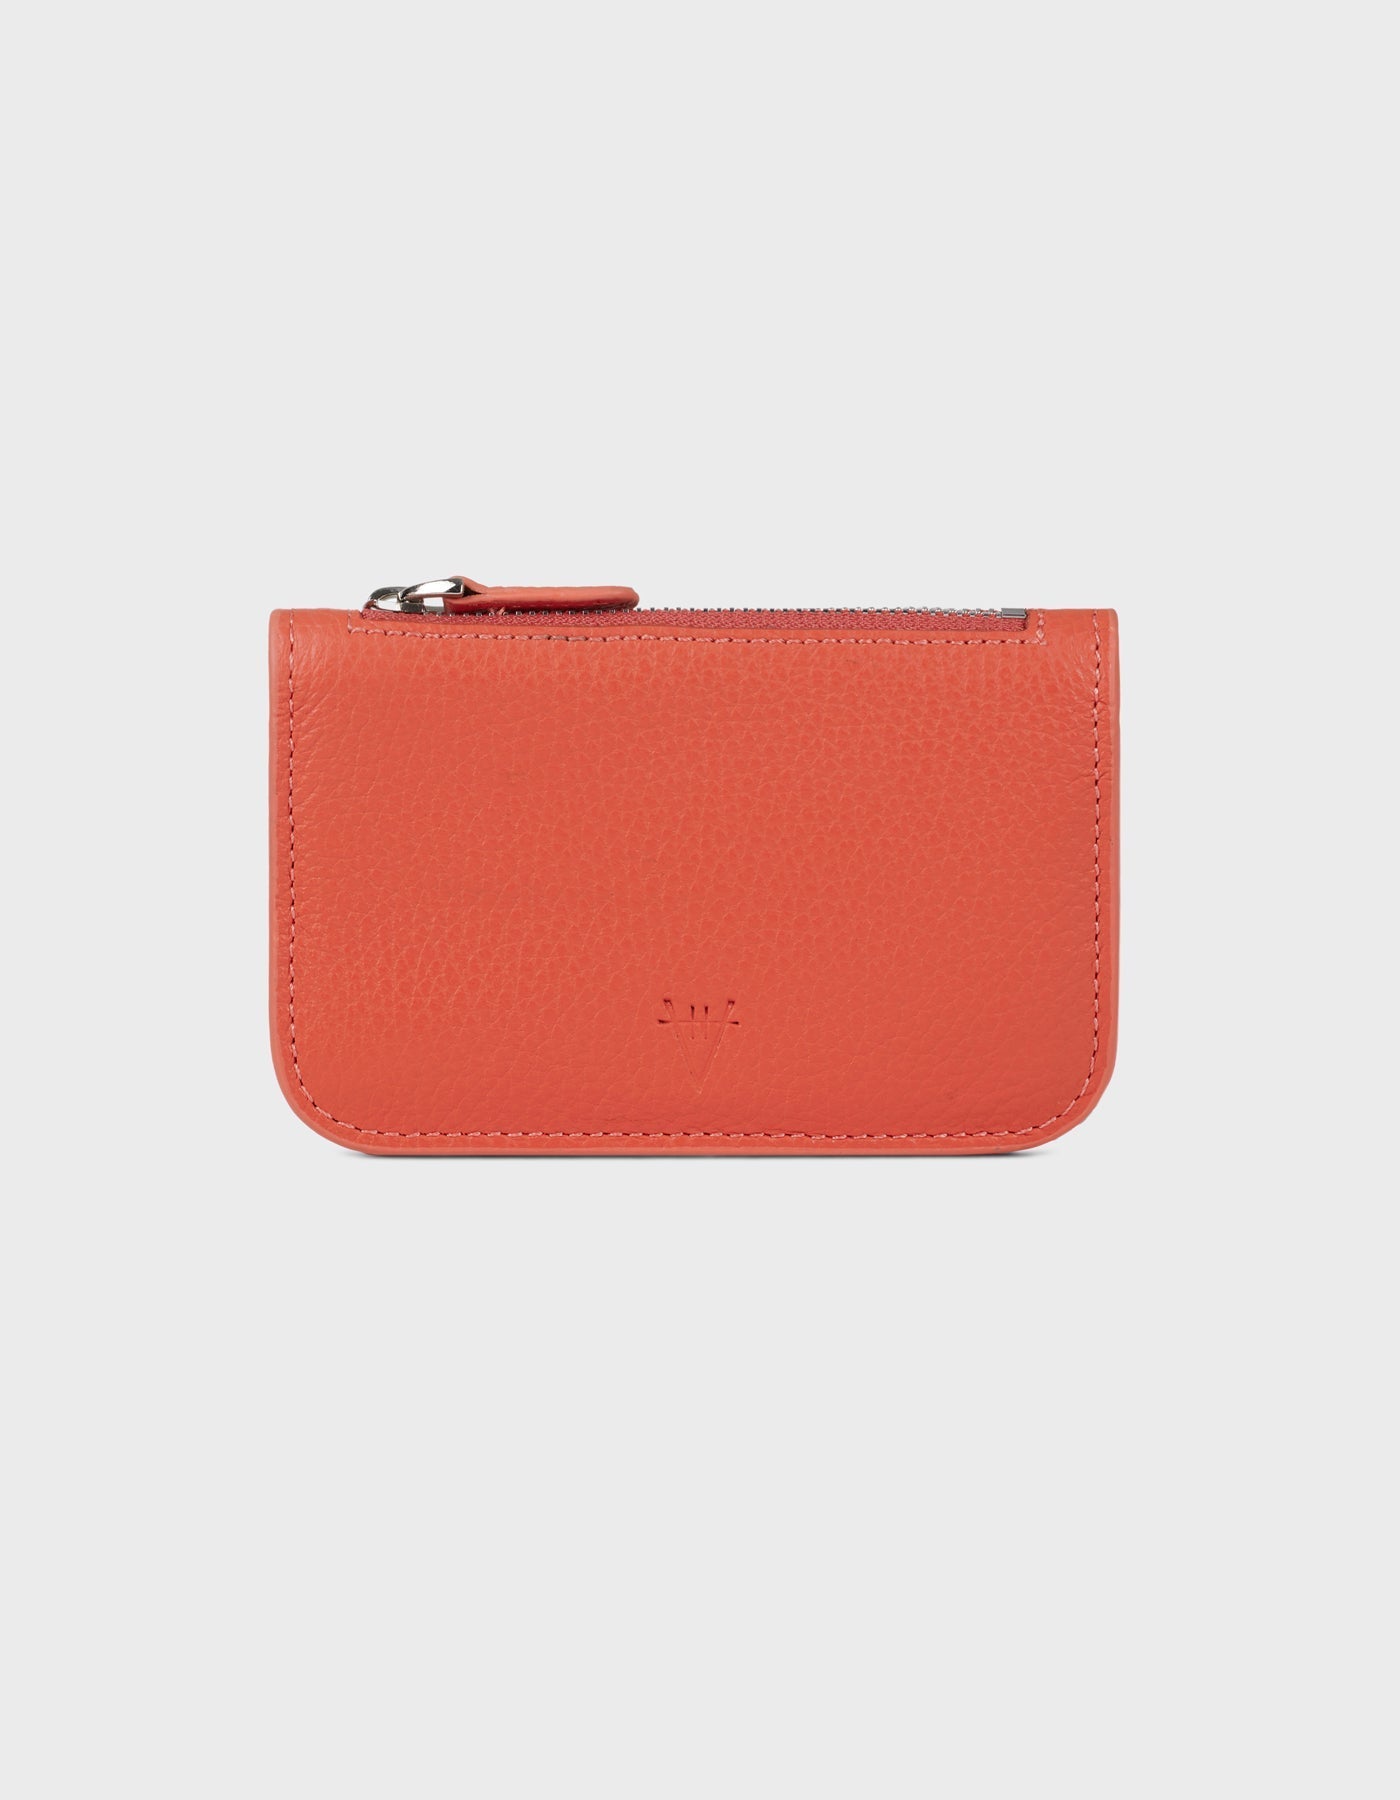 Hiva Atelier | Alae Coin Purse & Card Holder Orange | Beautiful and Versatile